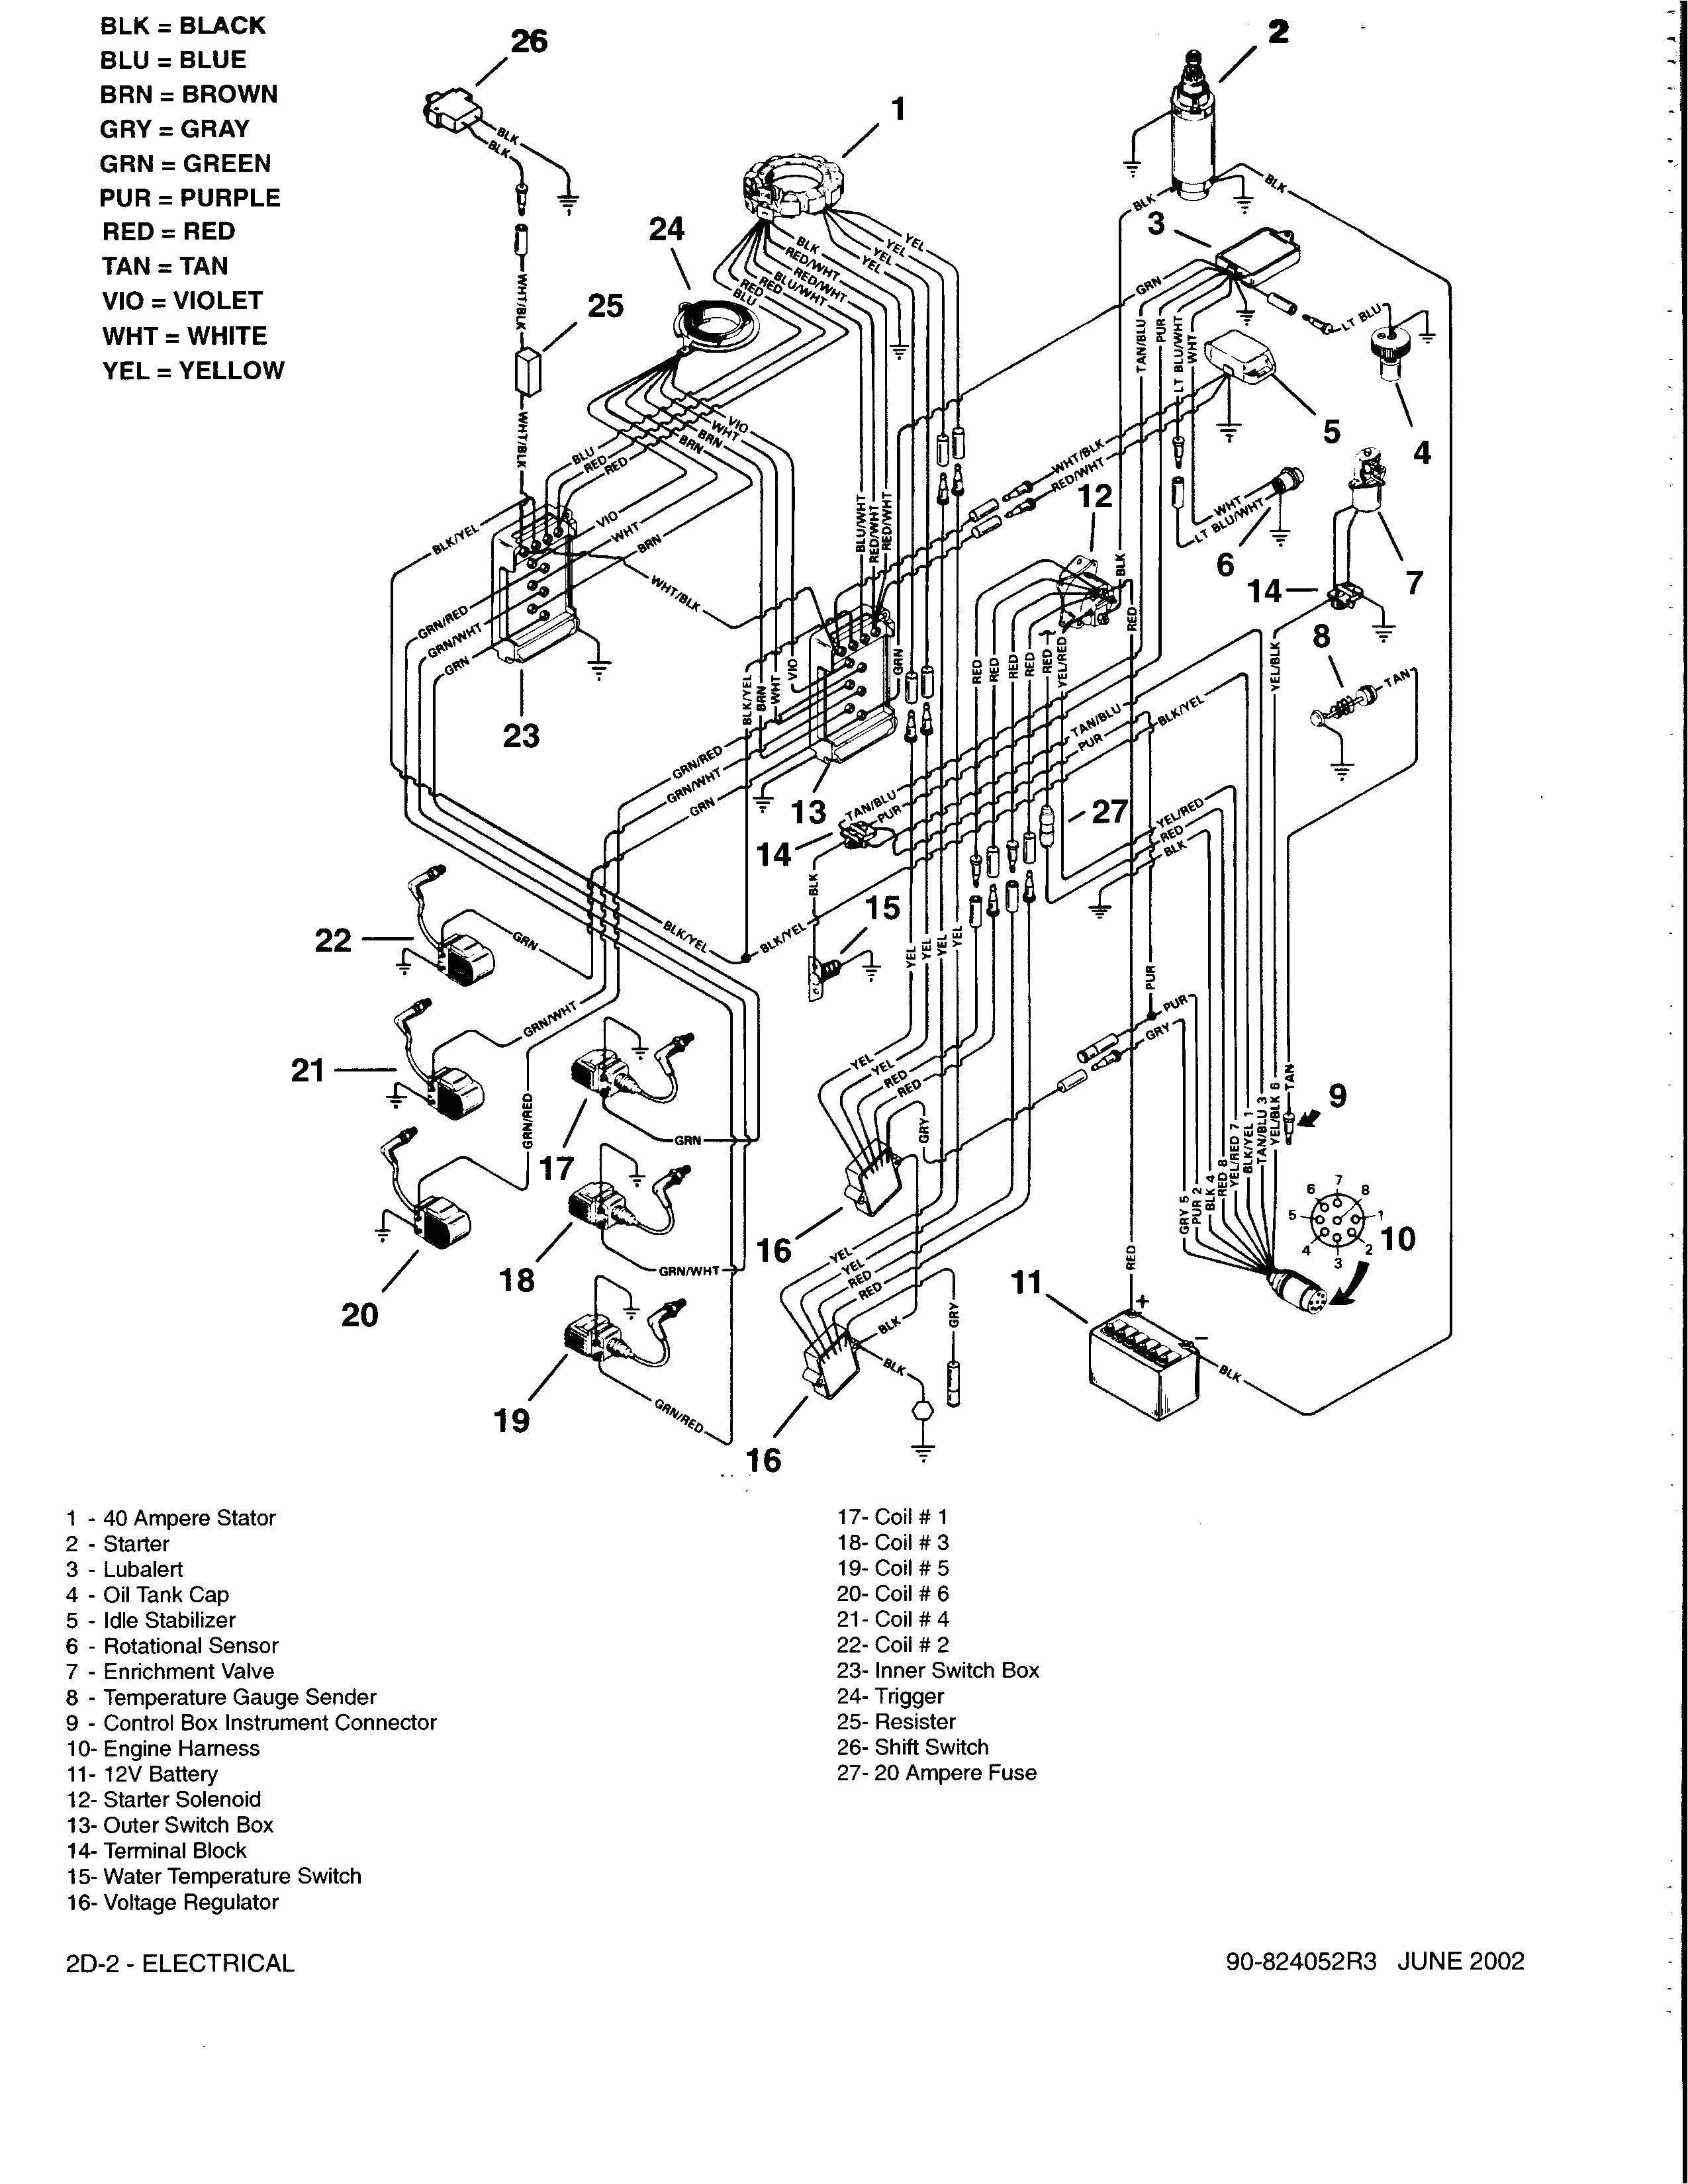 locknetics ct 1000 wiring diagram wiring diagram ebook locknetics ct 1000 wiring diagram wiring libraryhaltech sport